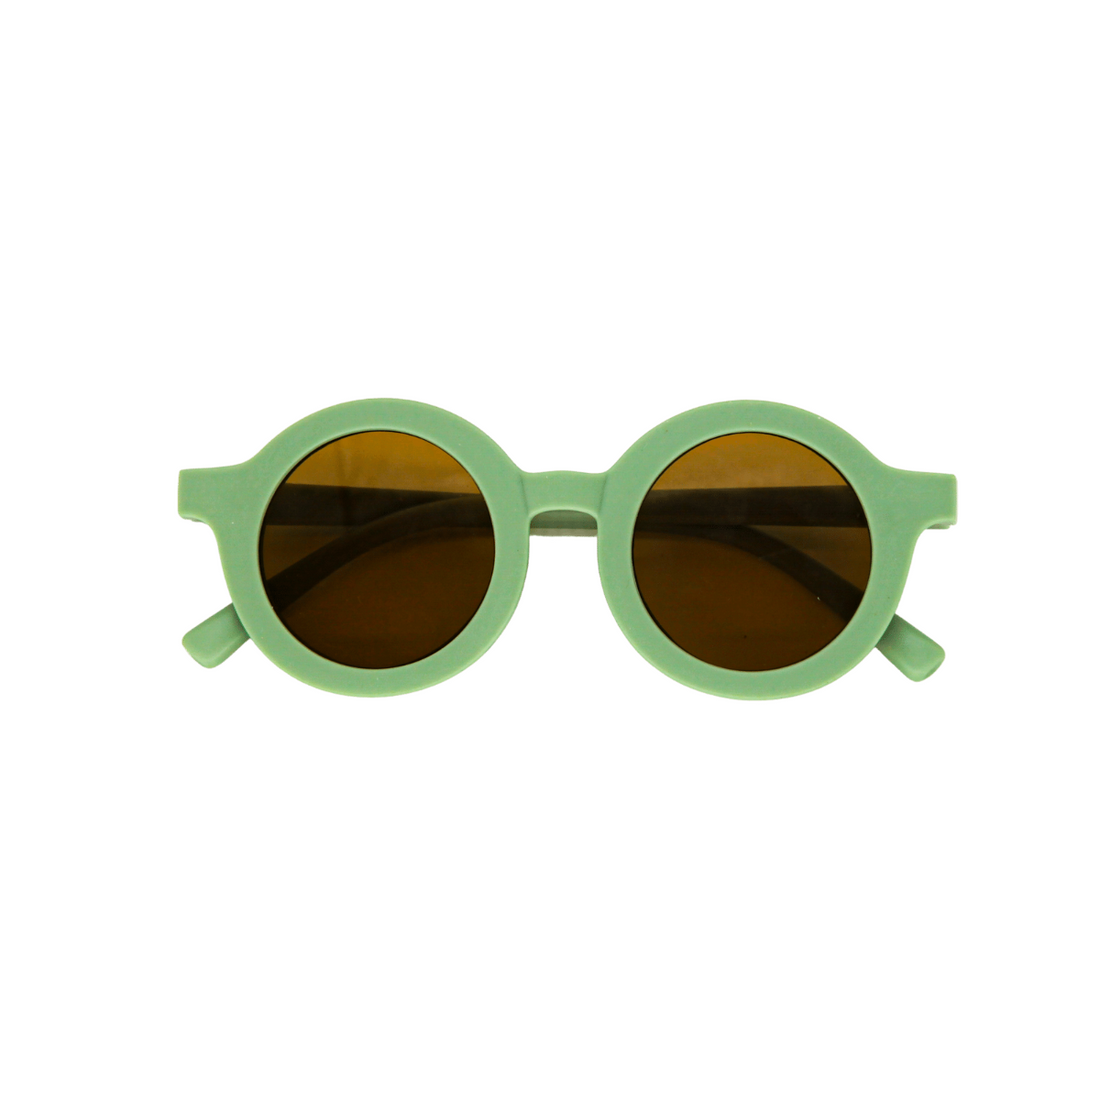 Buy Fancy Sunglasses for Kids, Boys and Girls Online